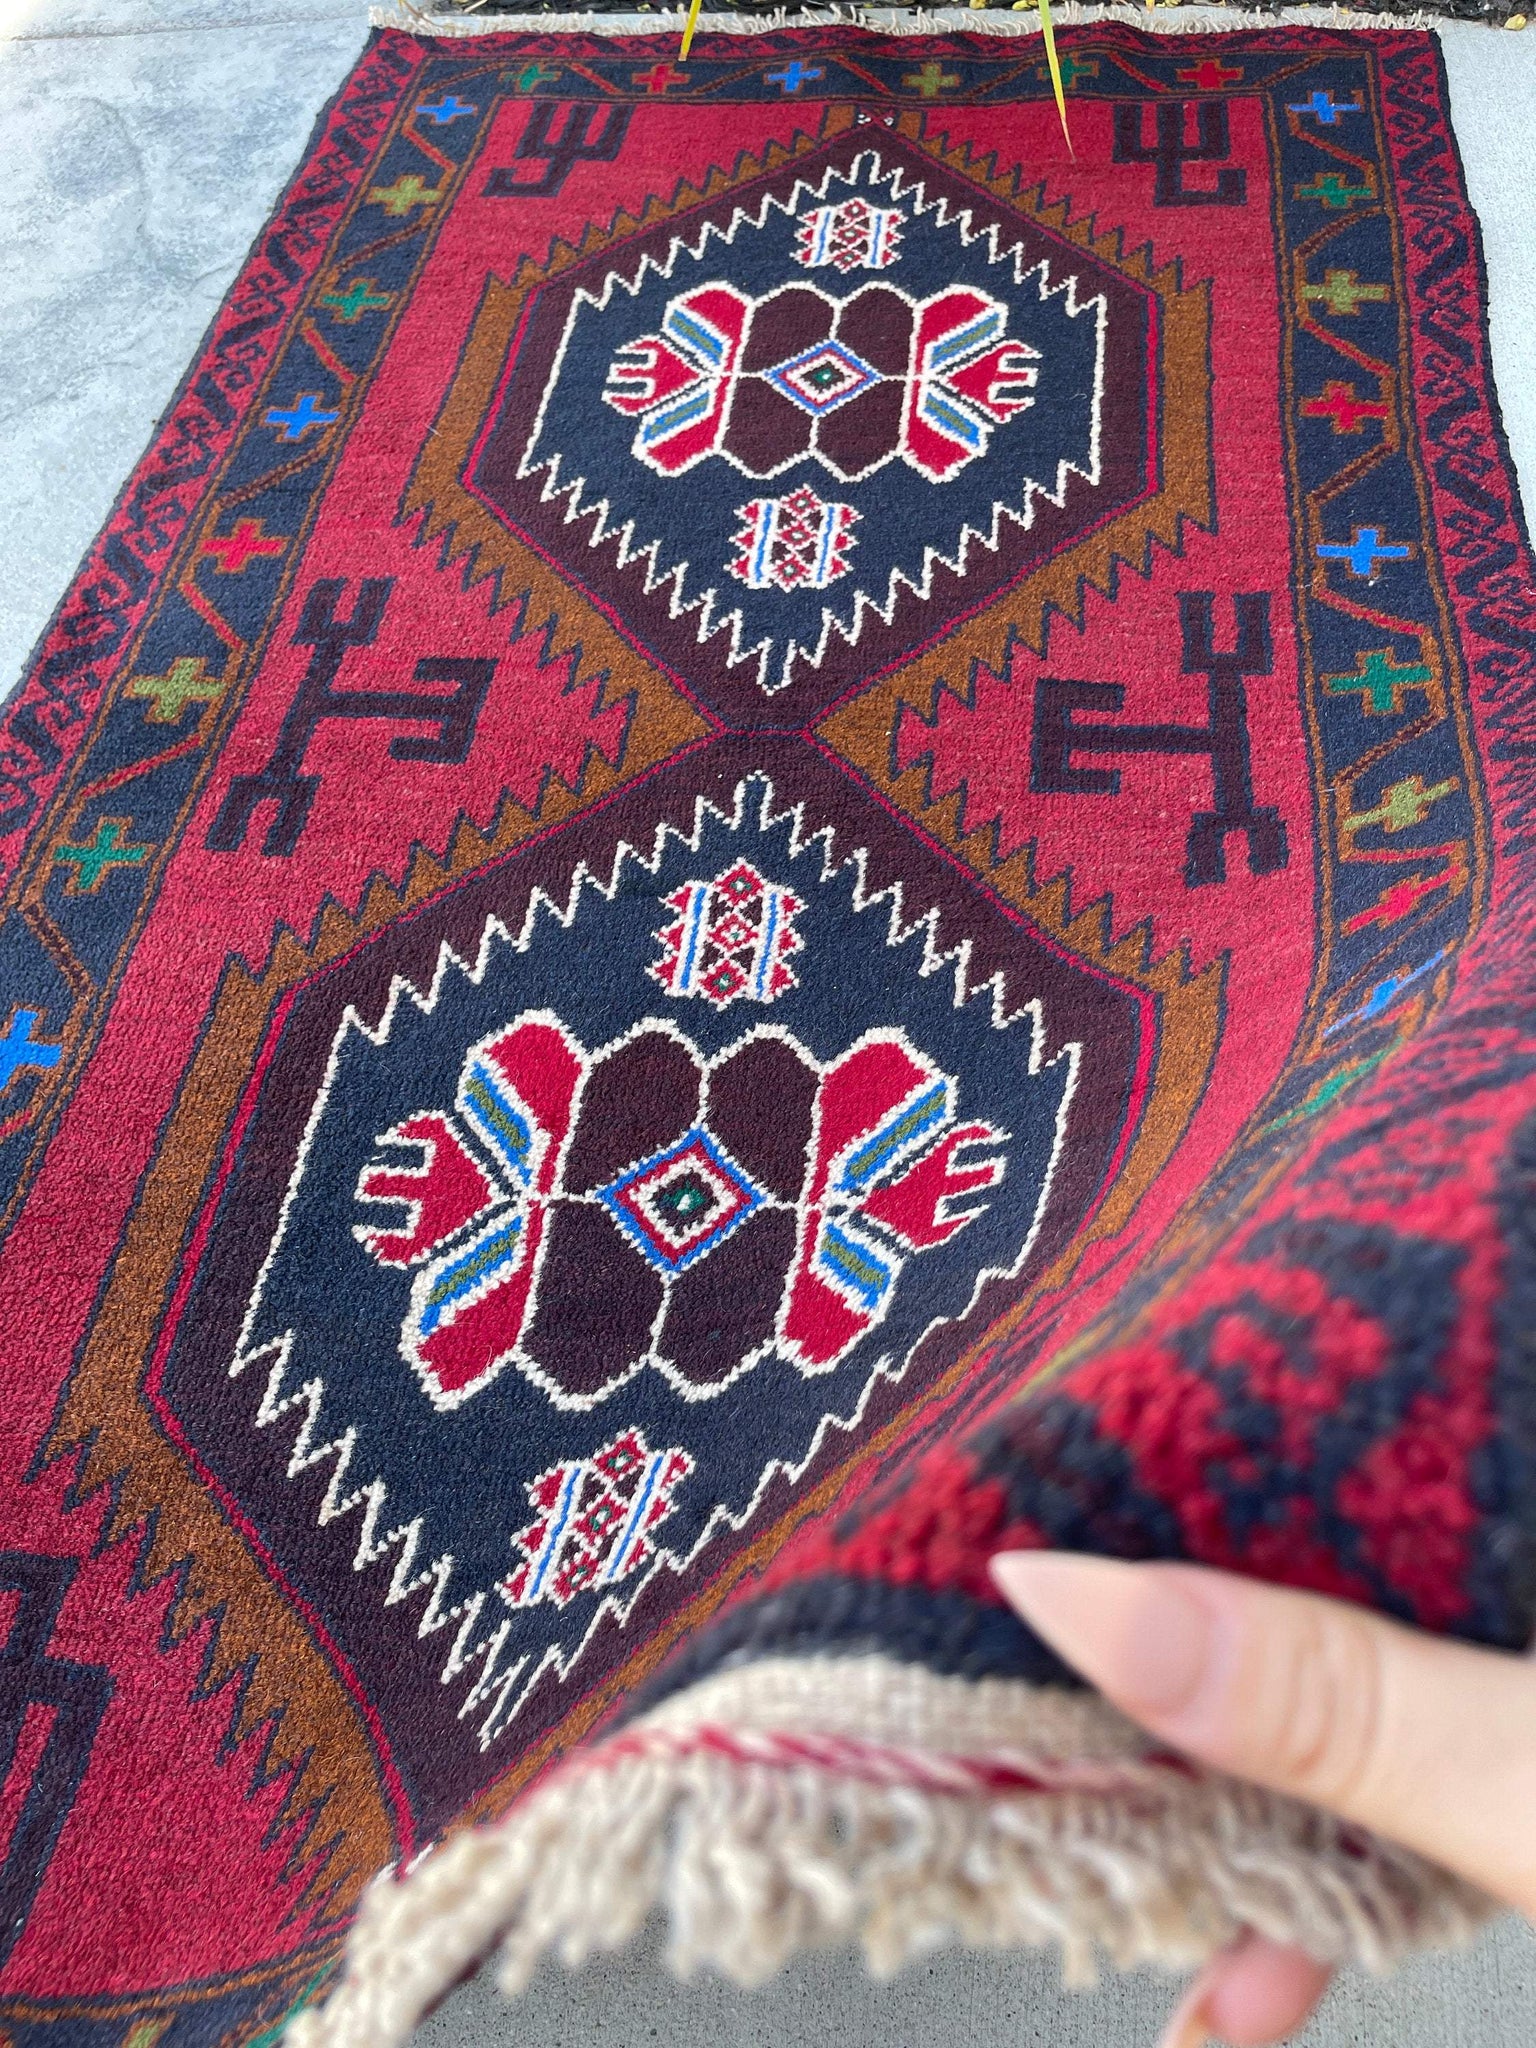 3x5 (90x150) Handmade Vintage Afghan Rug | Navy Blue Red Brown Green White Maroon| Nomadic Baluch Boho Bohemian Tribal Turkish Moroccan Wool